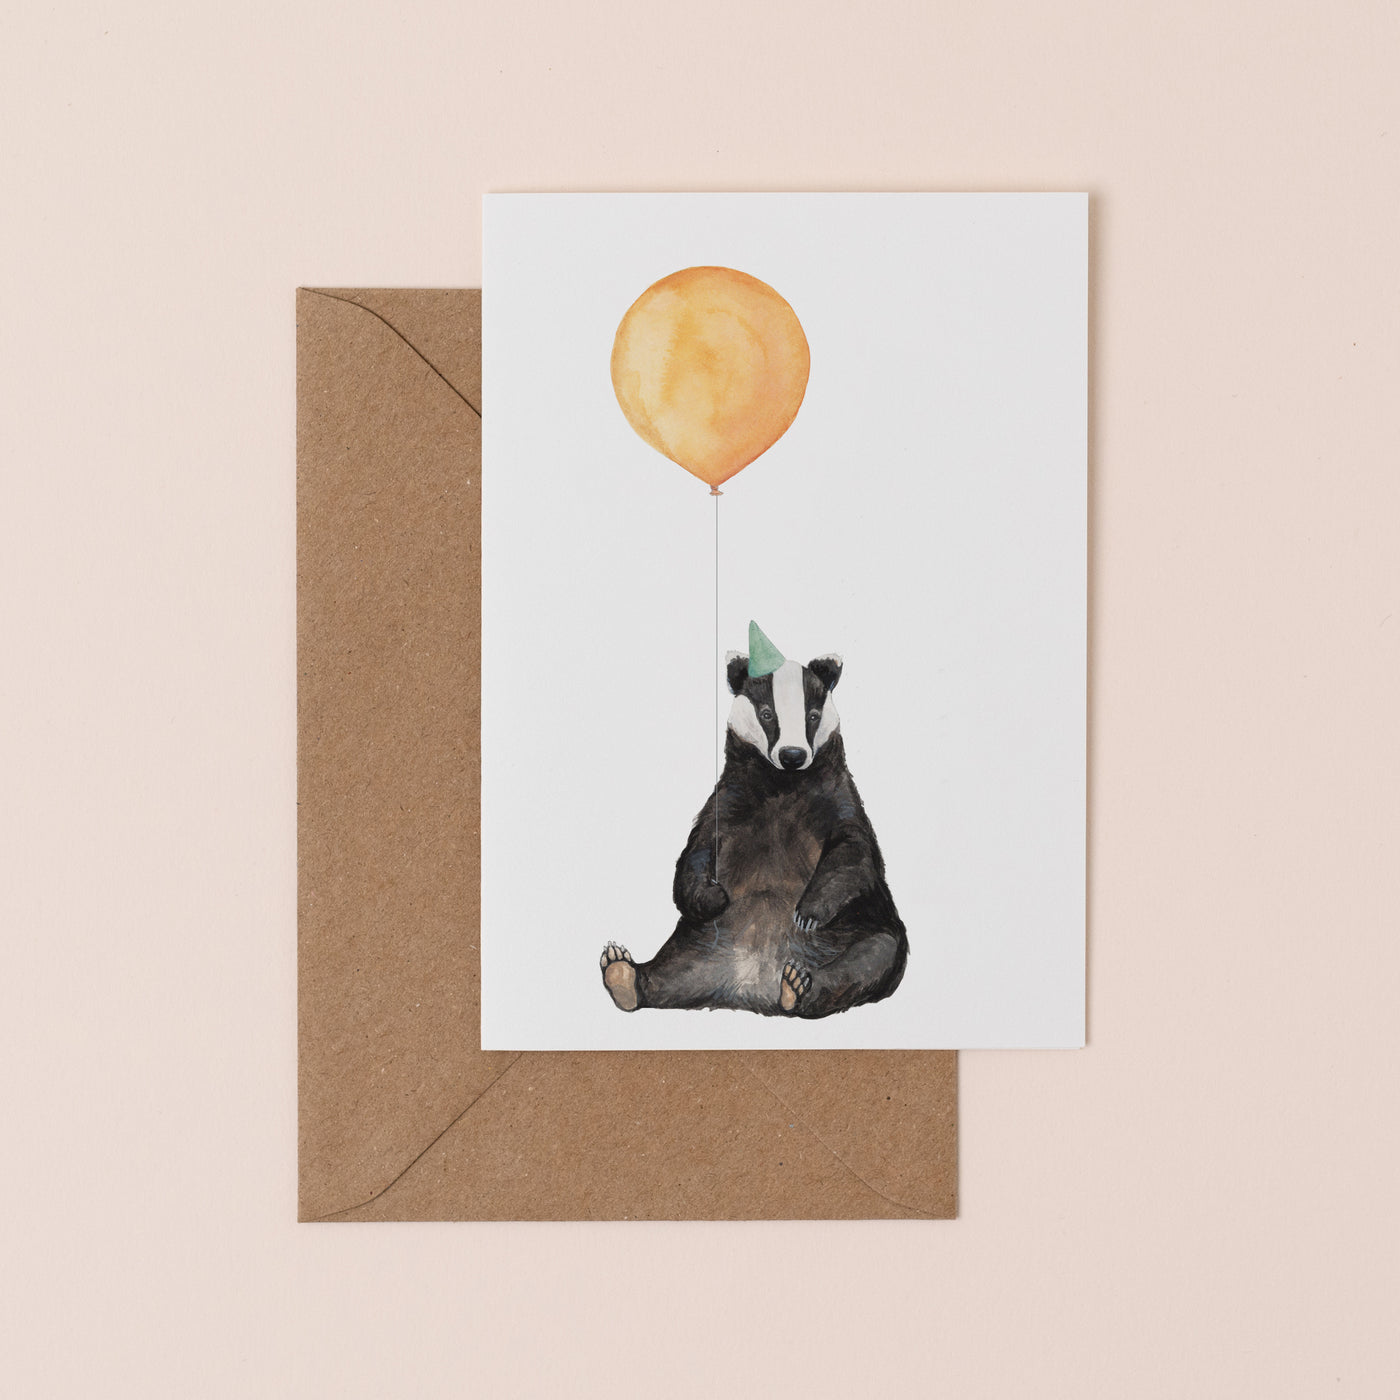 Balloon Animal Cards